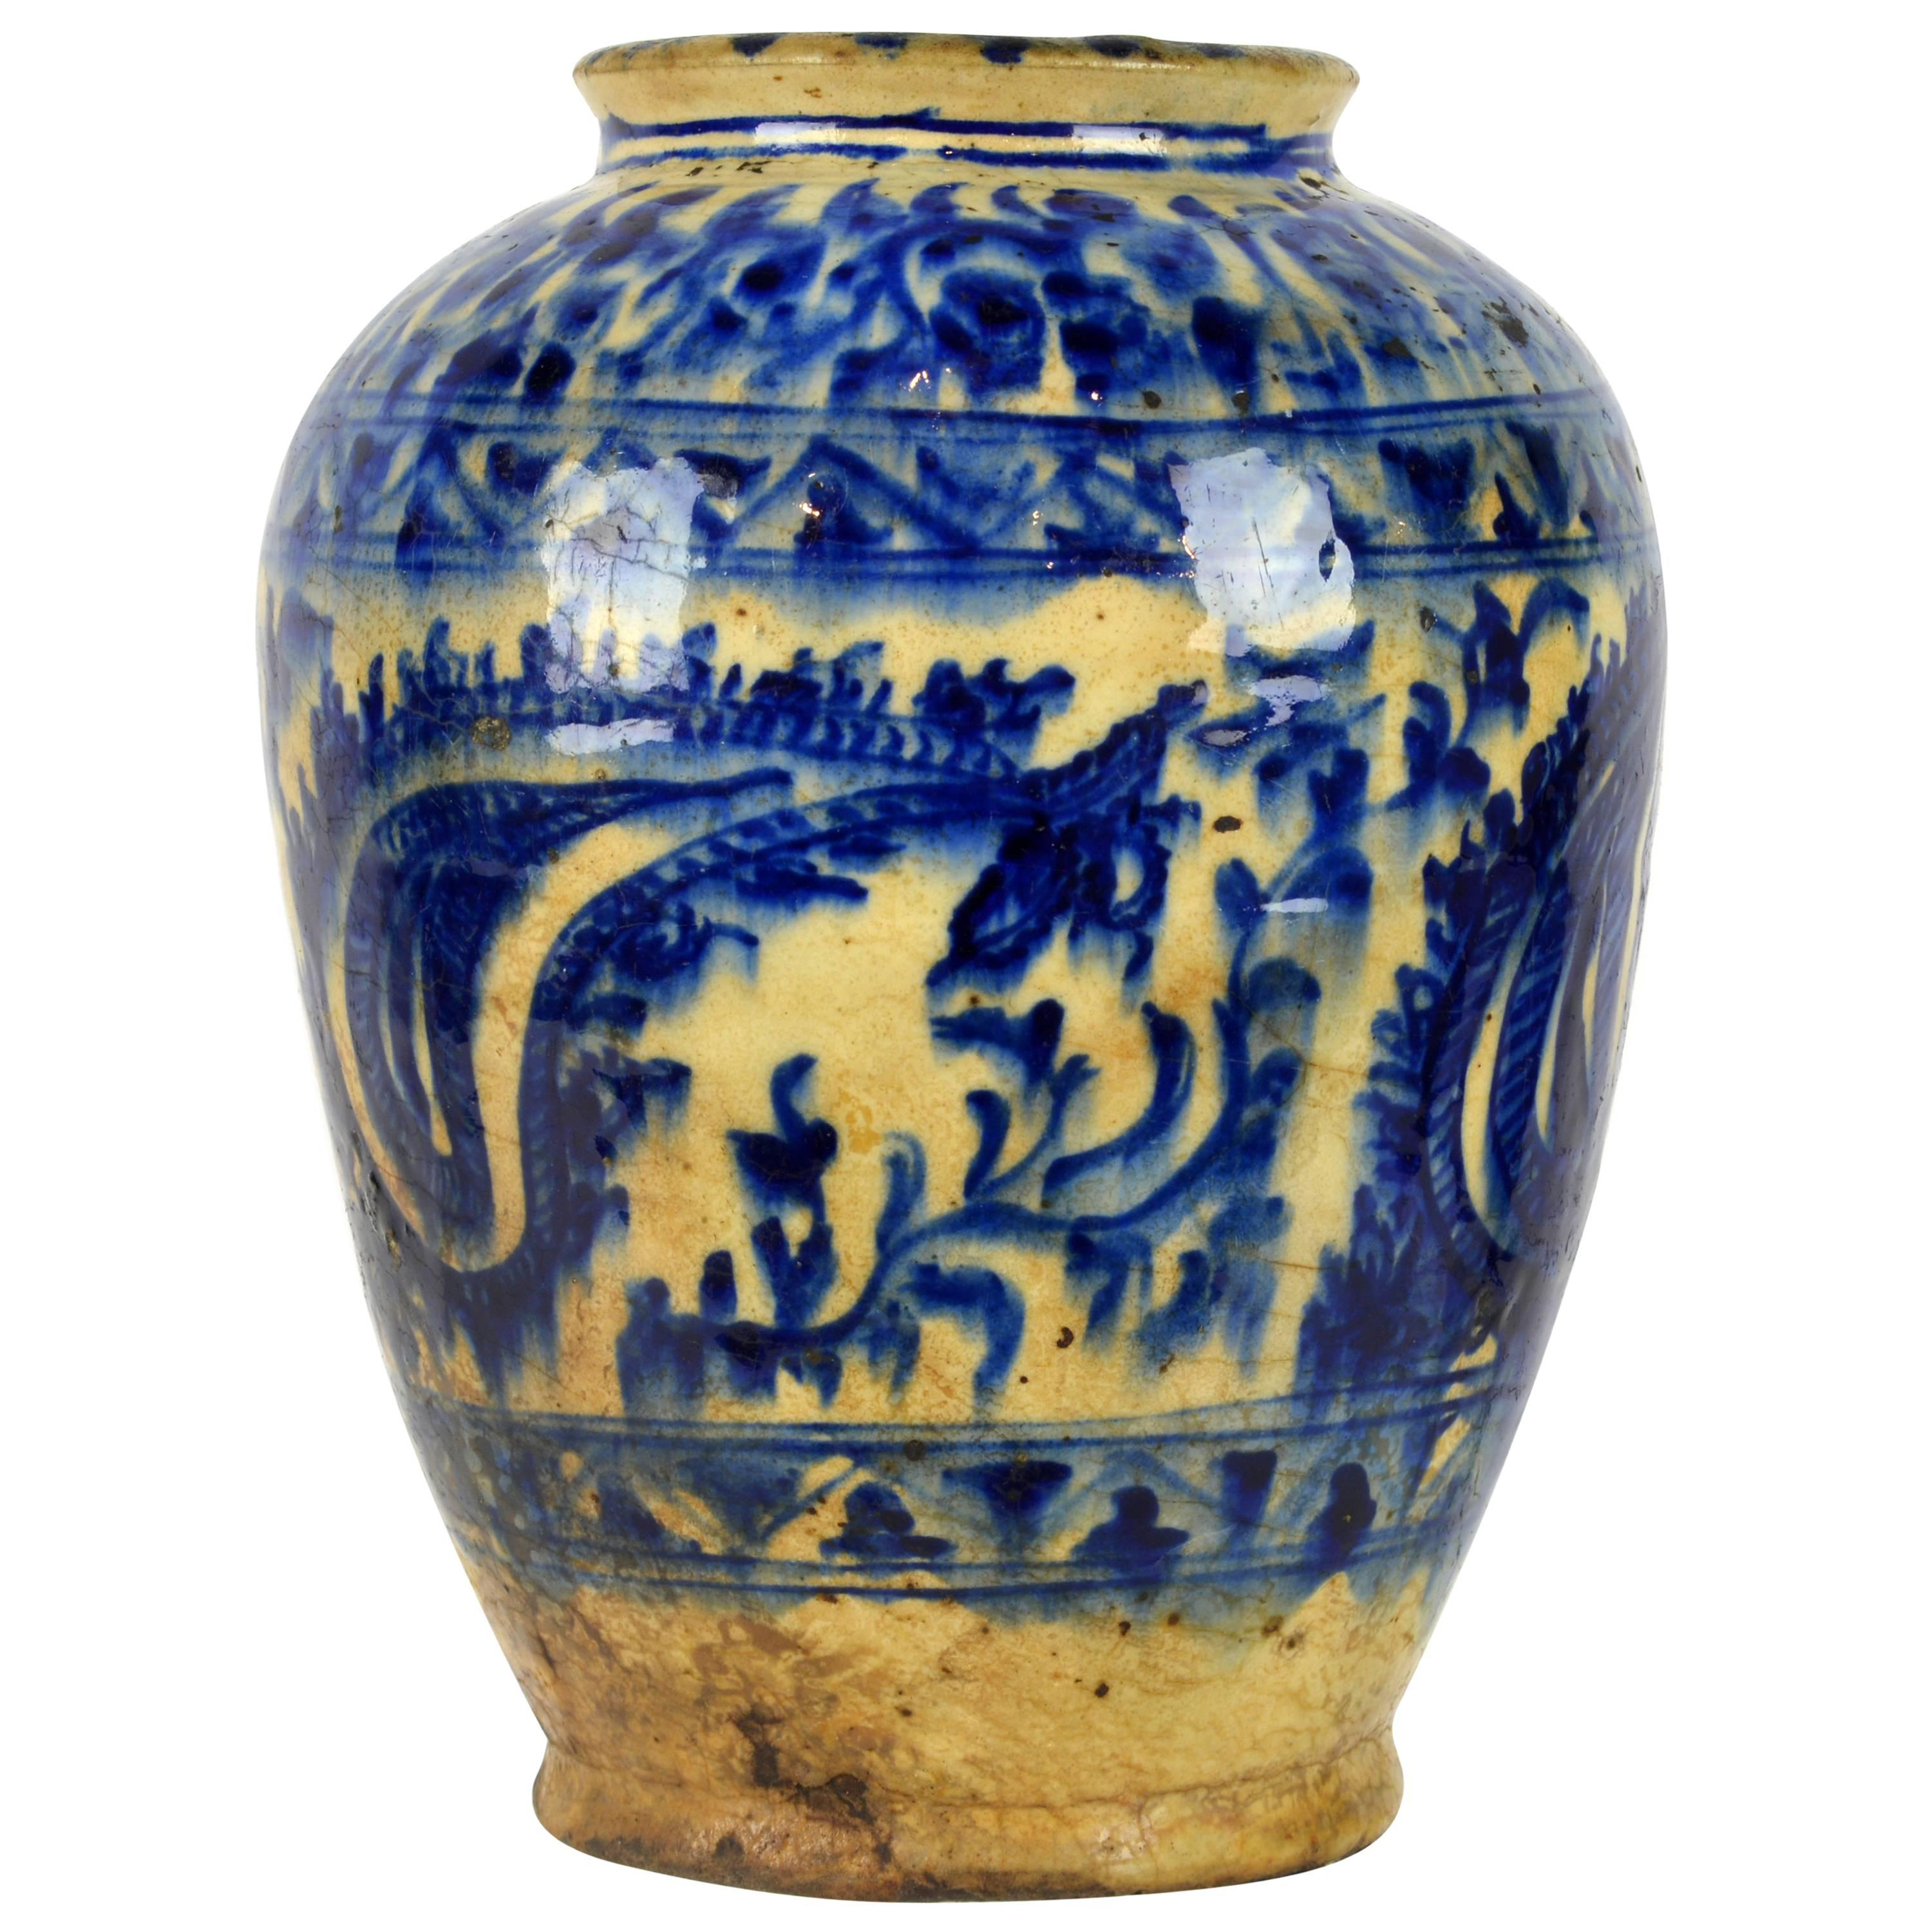 Rare Islamic Mamluk Period 16th Century Likely Syrian Blue and White Ceramic Jar